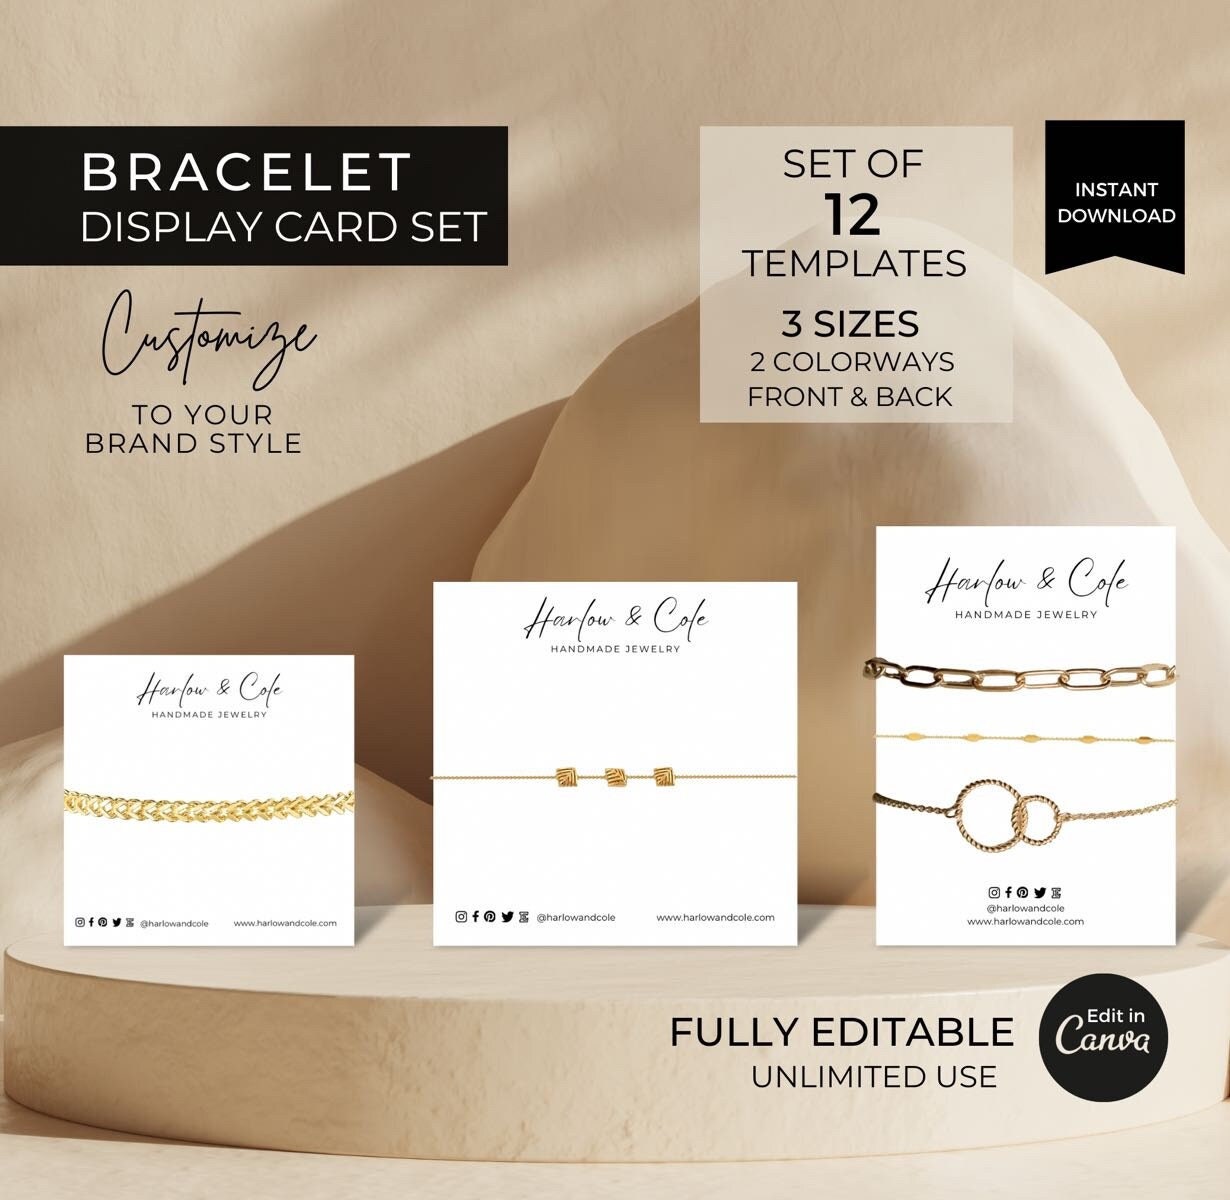 Small Box Faircore Pearl Bracelet Y2k Handmade Fairy Tale Core